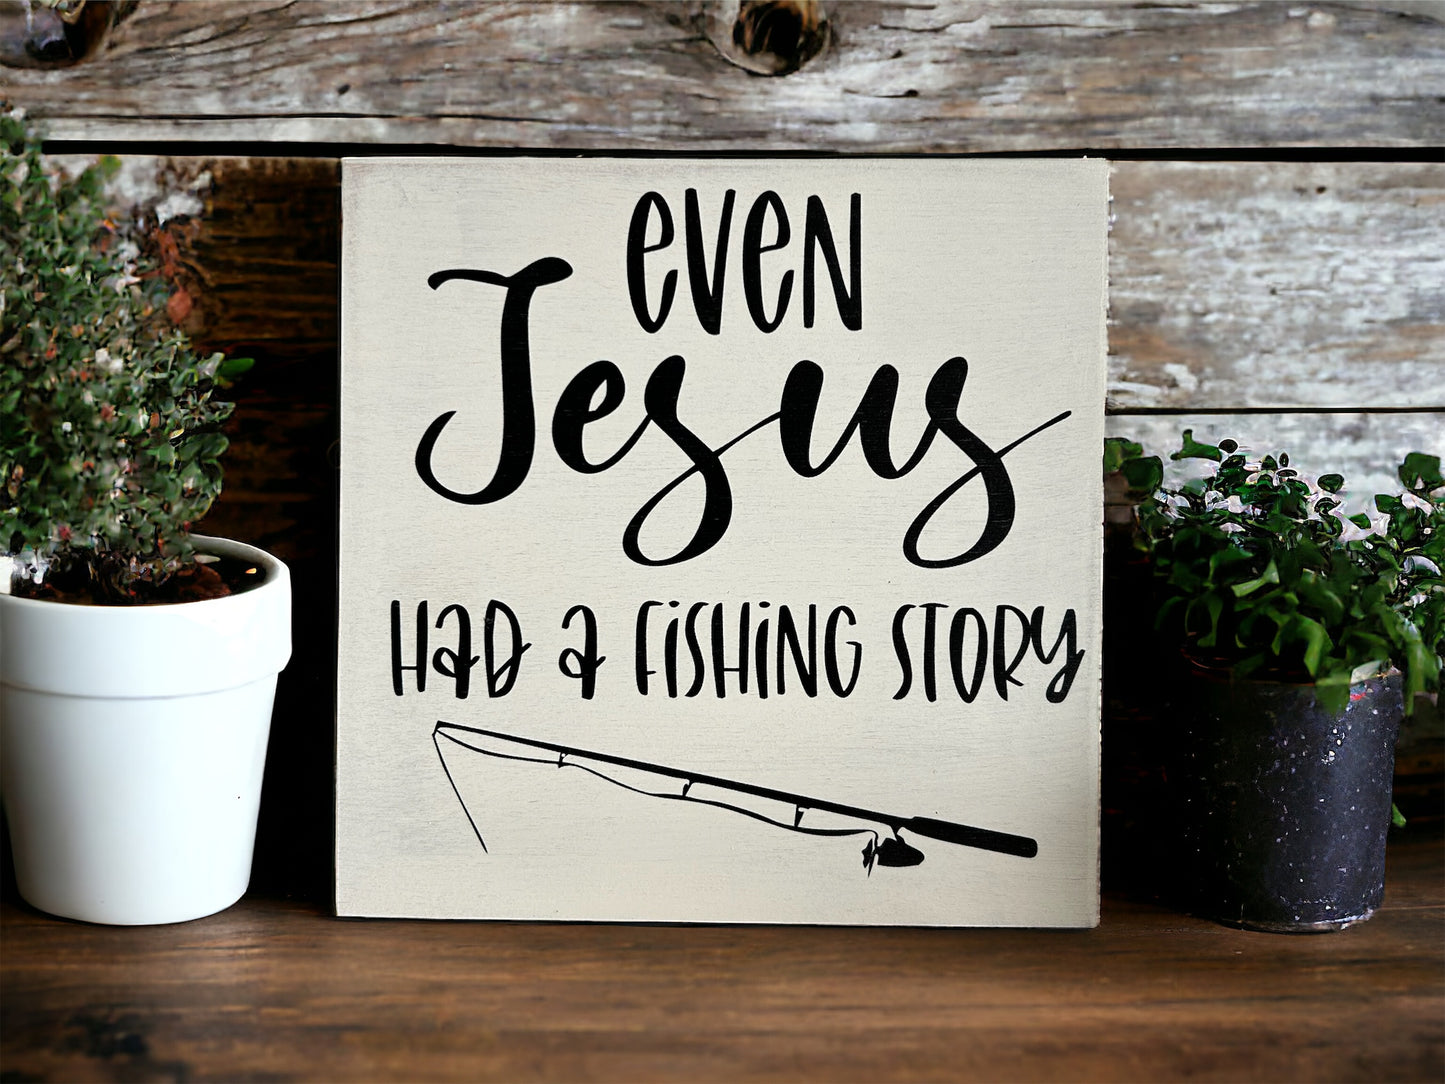 Even Jesus Had A Fishing Story - Rustic Wood Shelf Sitter